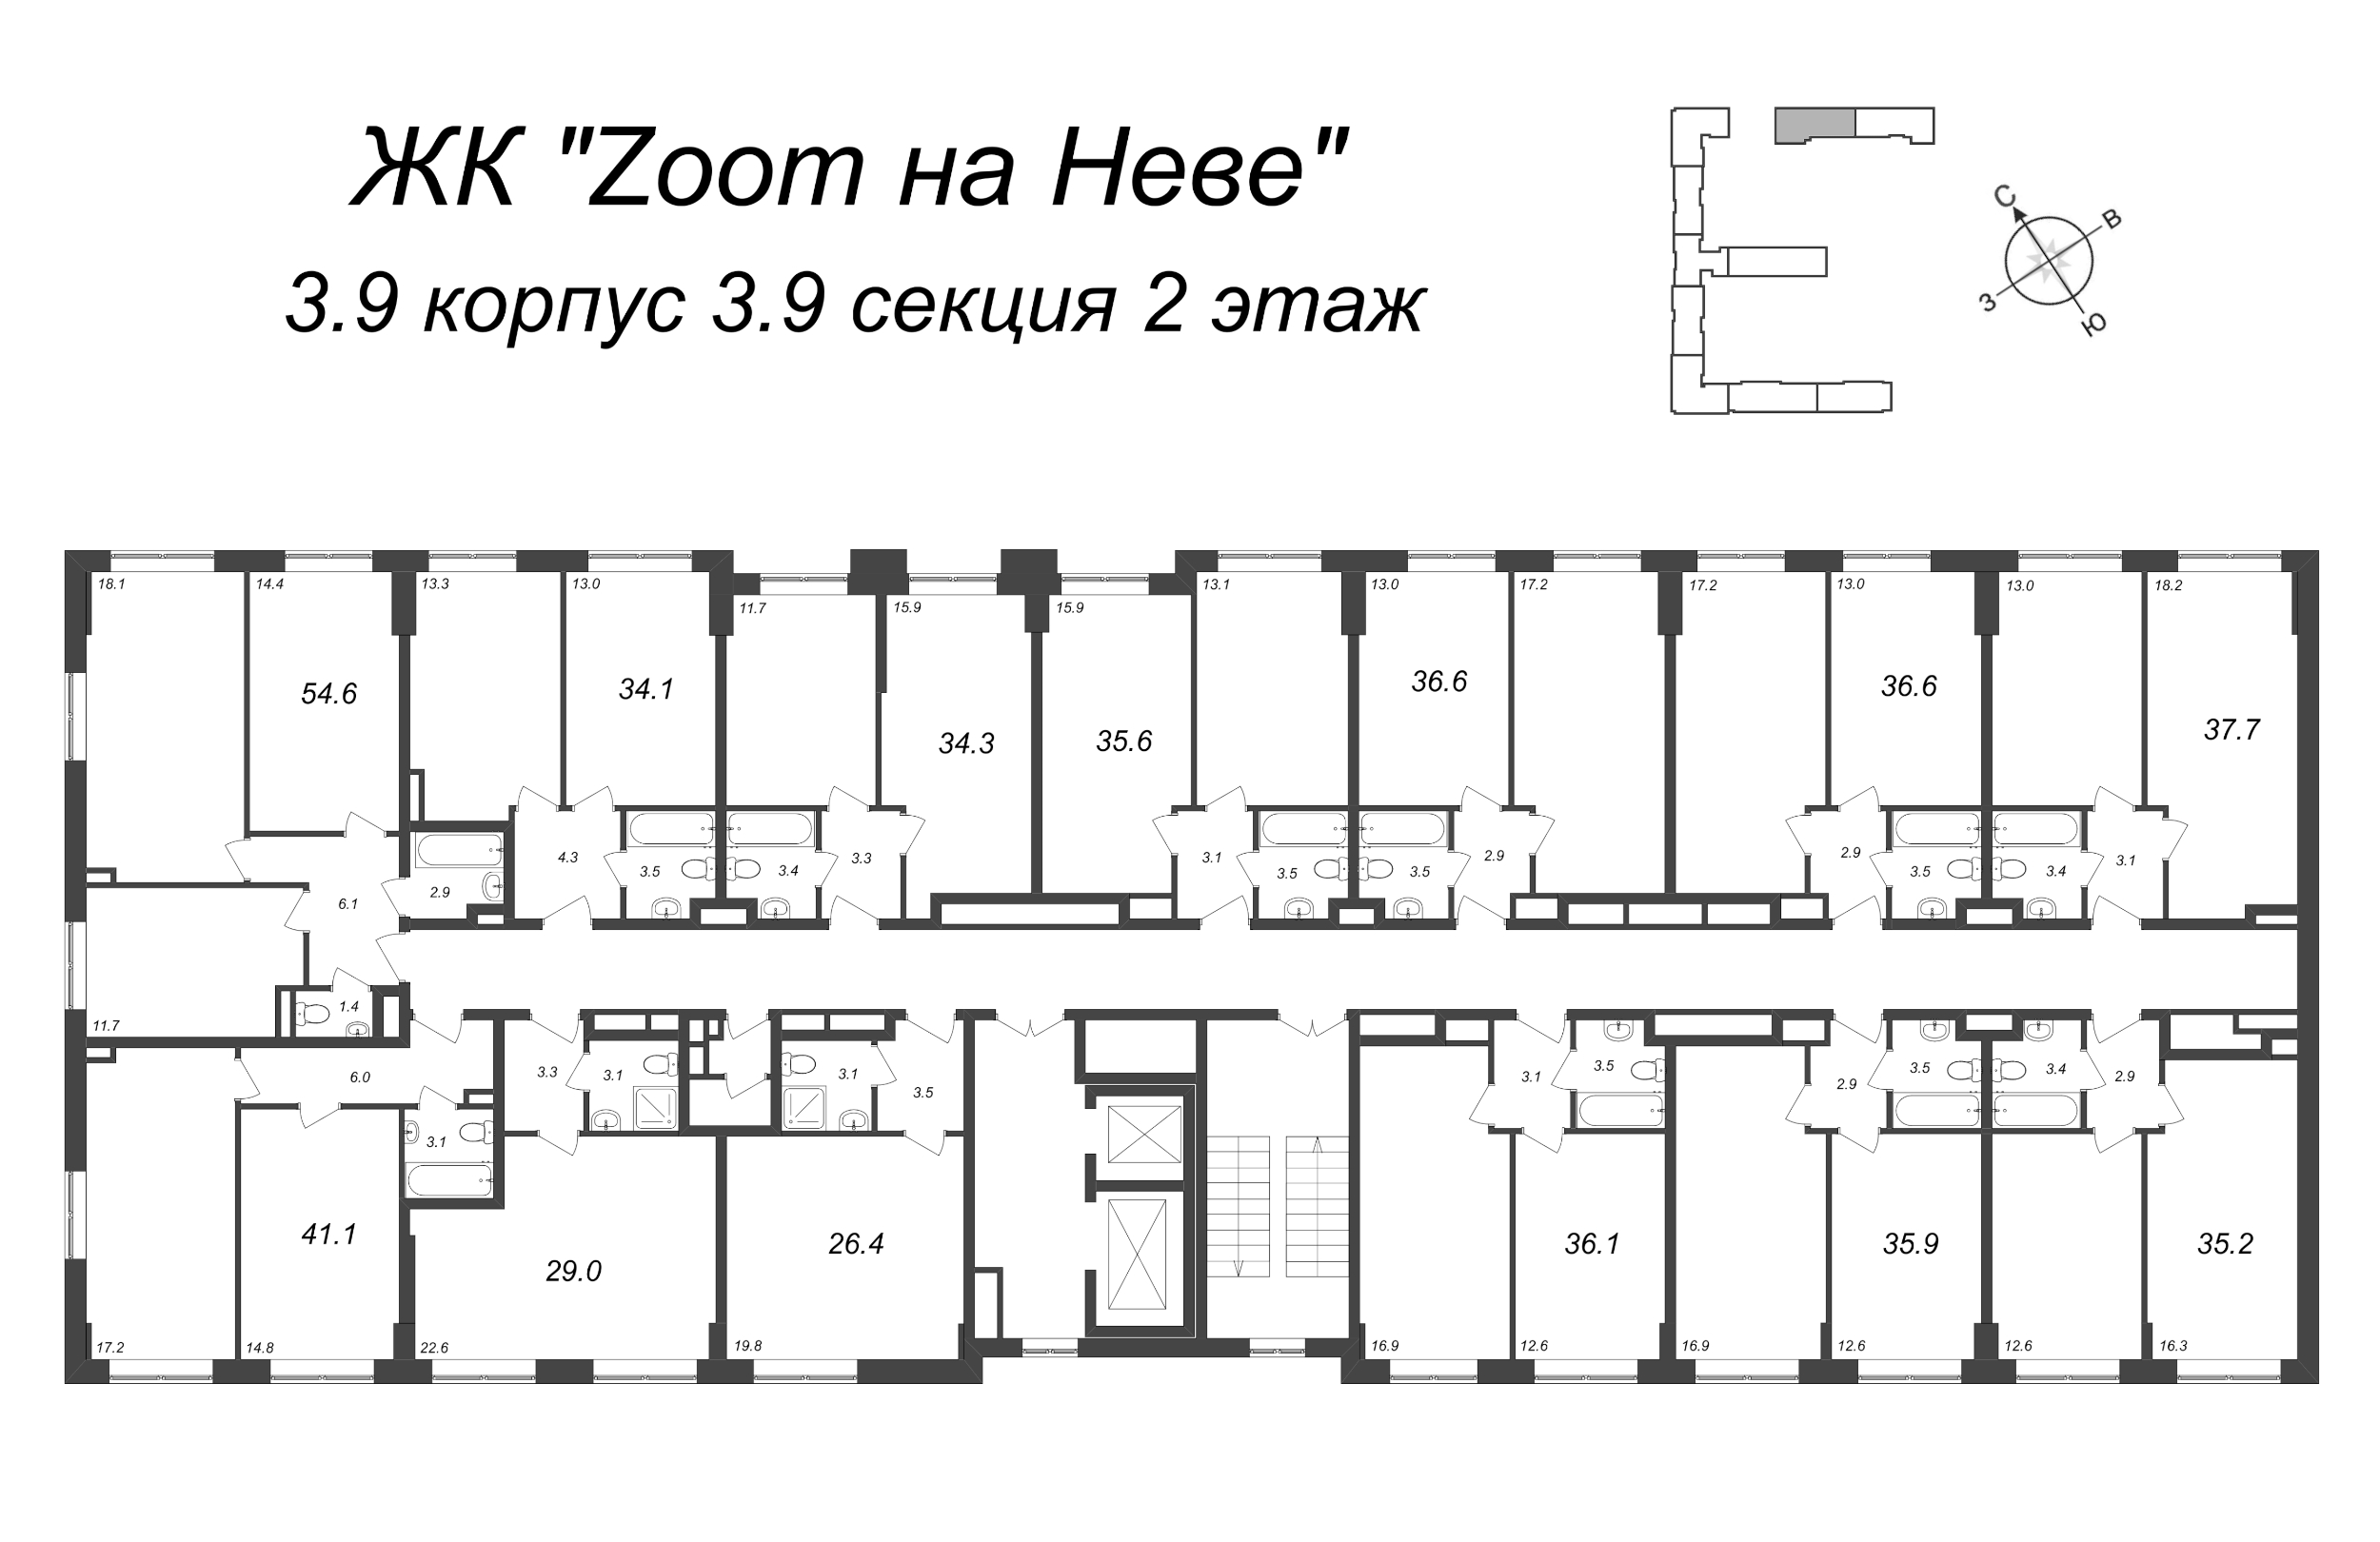 2-комнатная (Евро) квартира, 34.78 м² в ЖК "Zoom на Неве" - планировка этажа